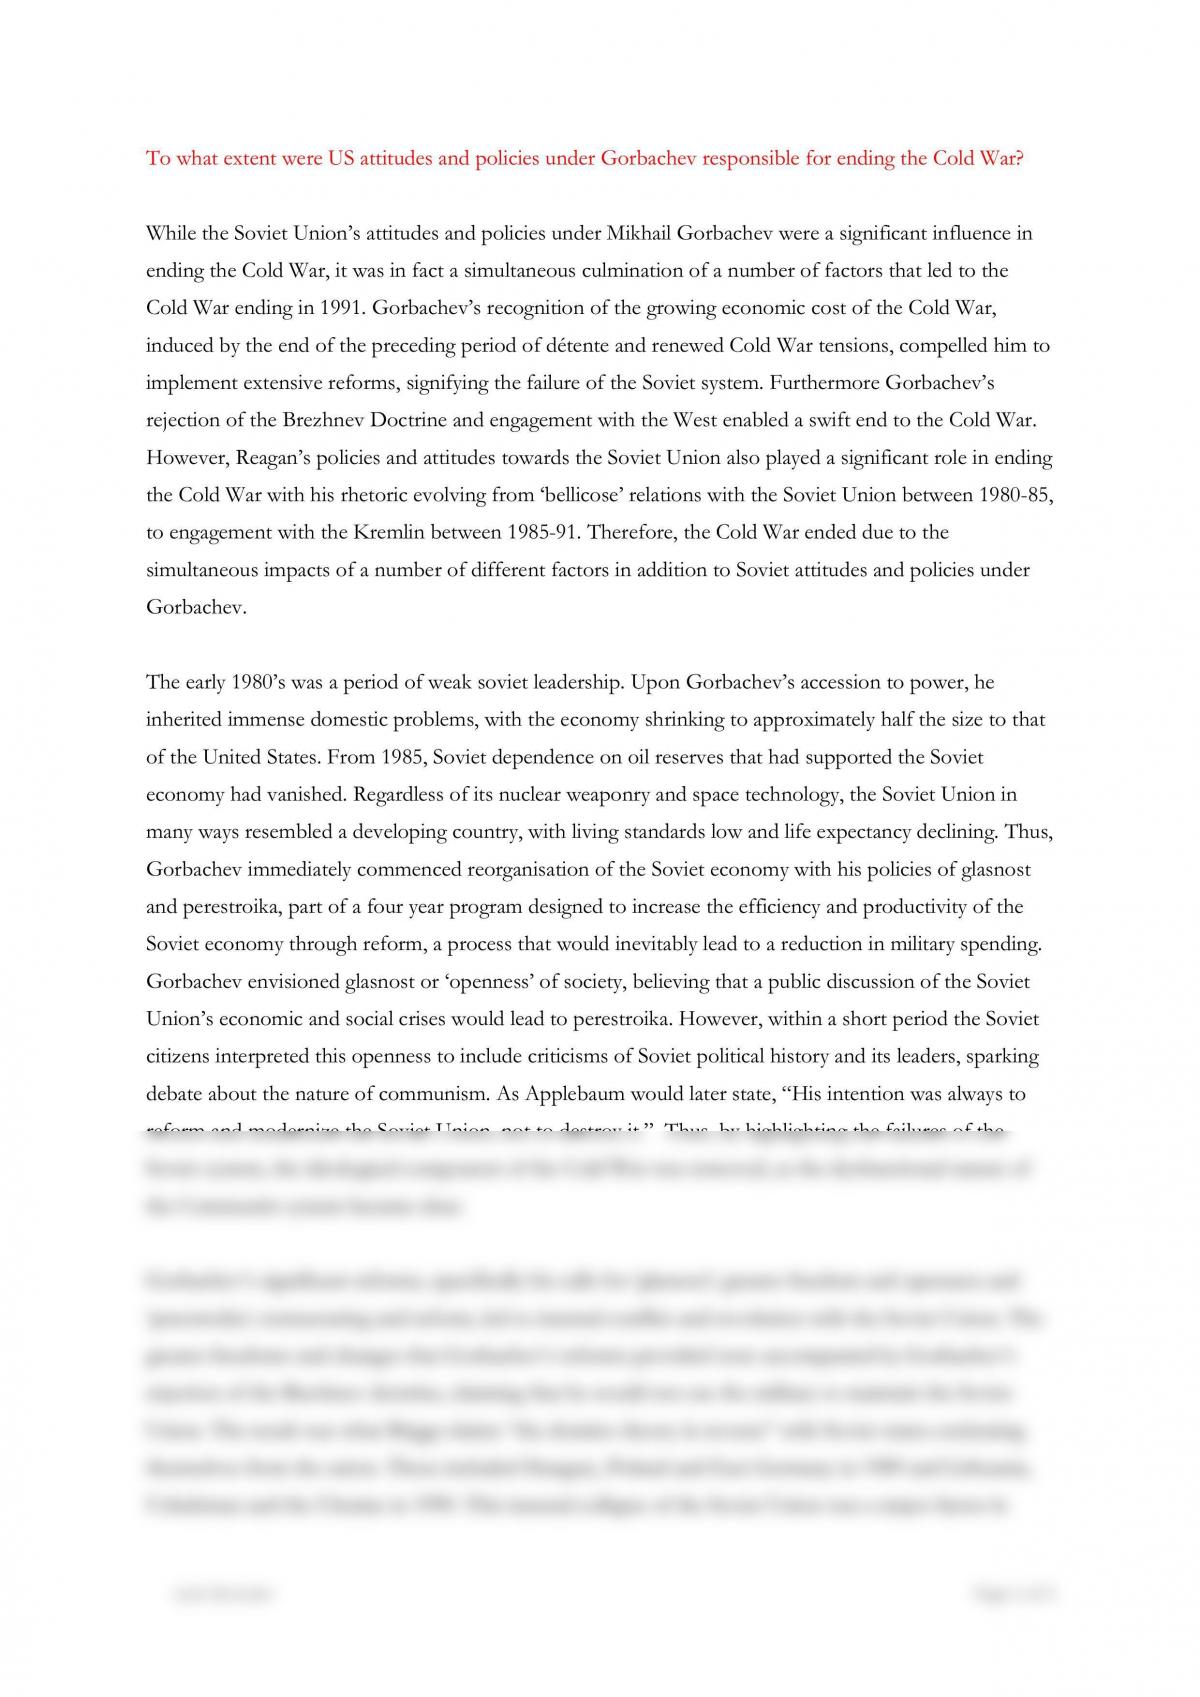 cold war essay grade 12 pdf